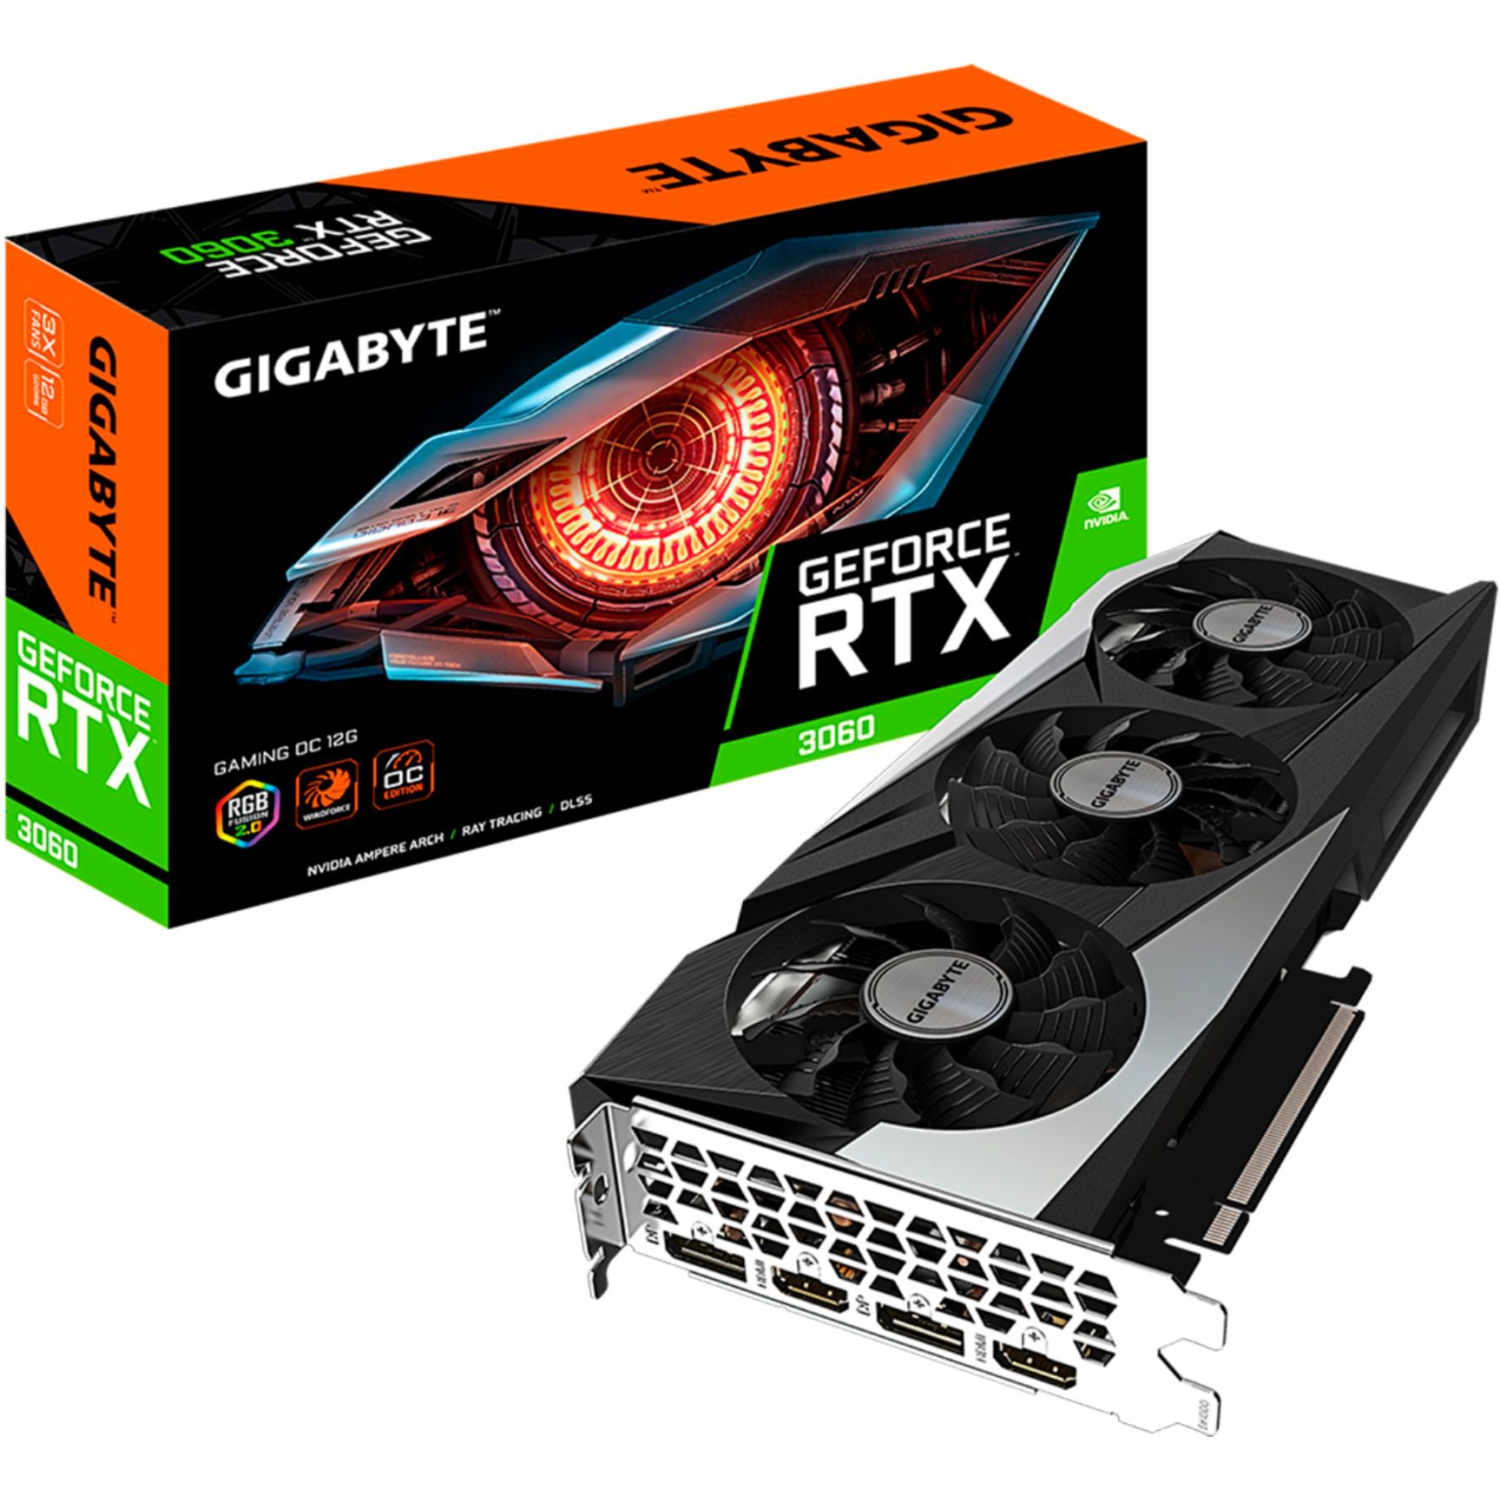 Gigabyte GeForce RTX 3060 GAMING OC LHR 12GB Graphics Card